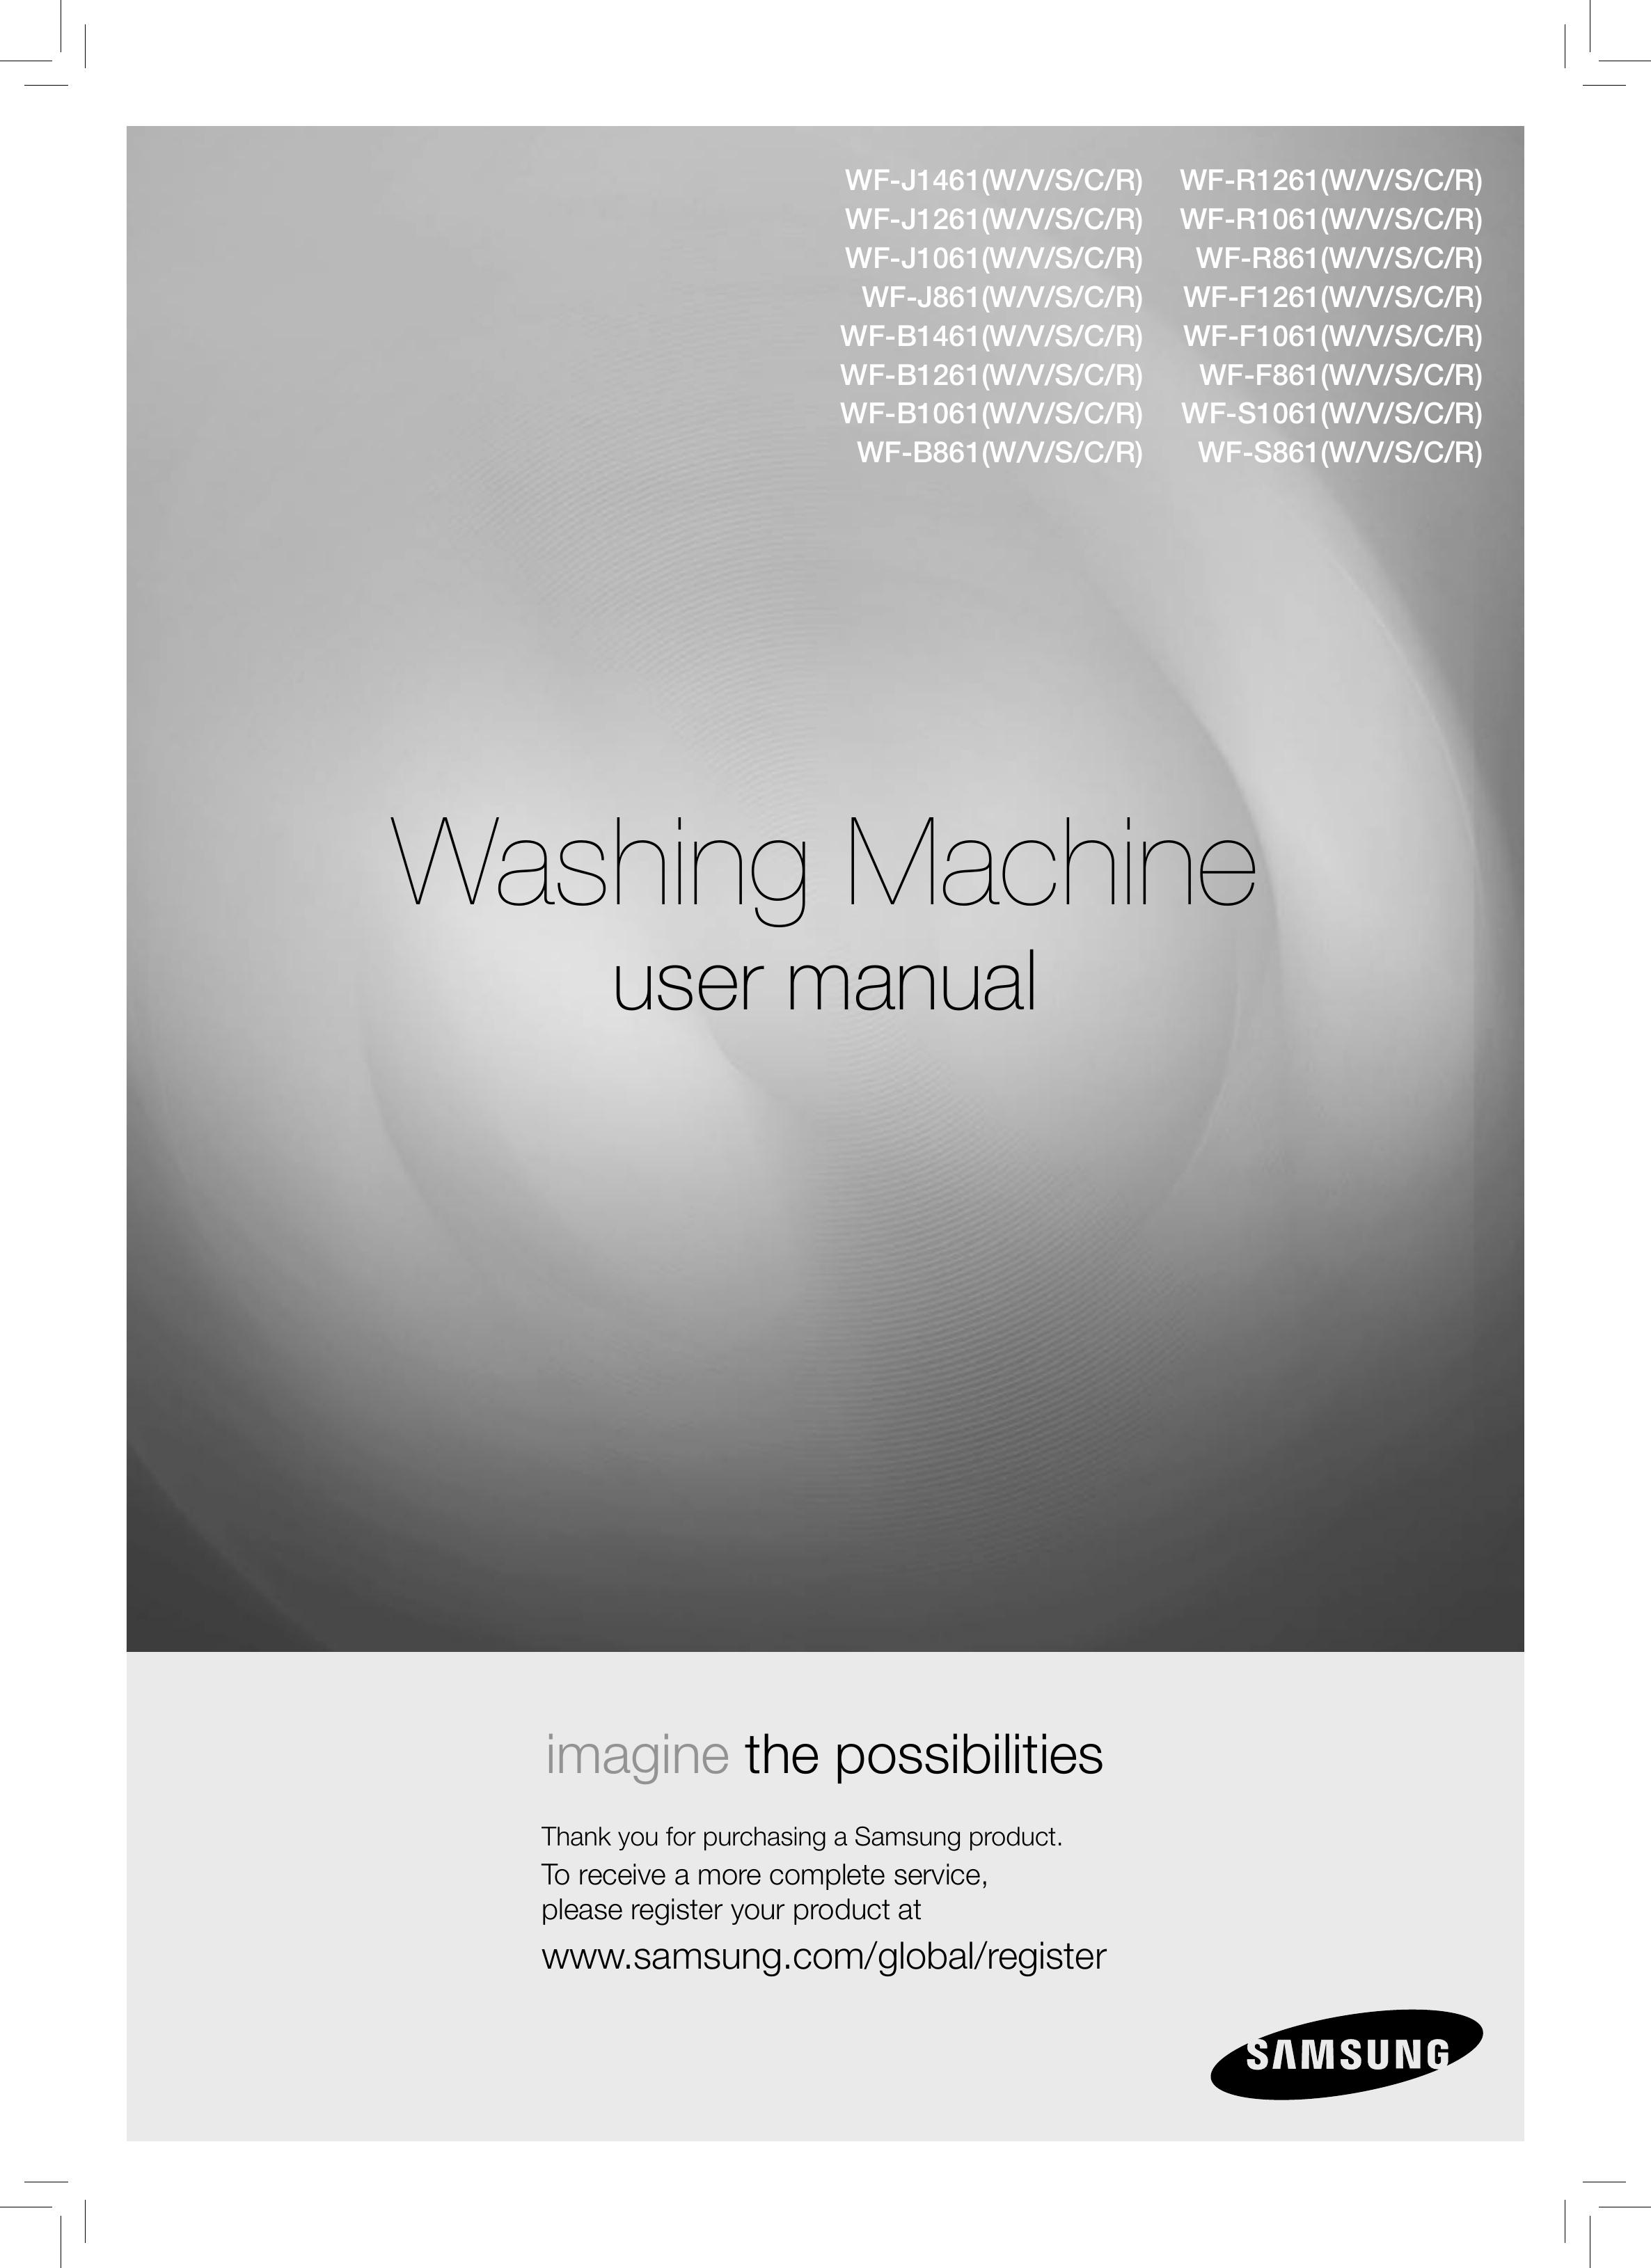 Samsung WF-B1261 Washer/Dryer User Manual